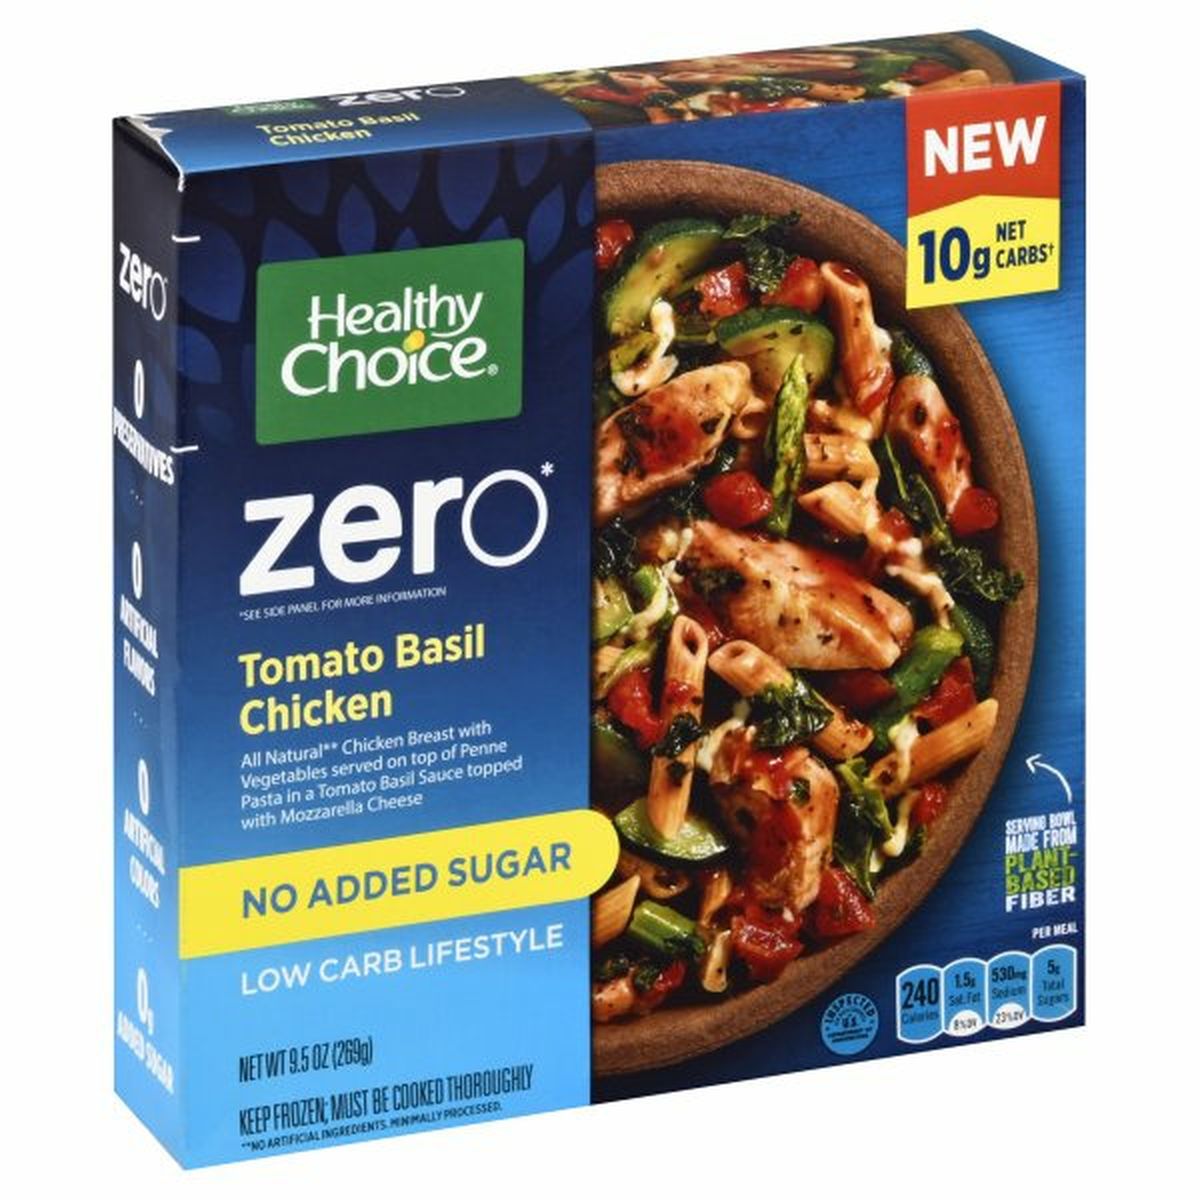 Calories in Healthy Choice Zero Tomato Basil Chicken